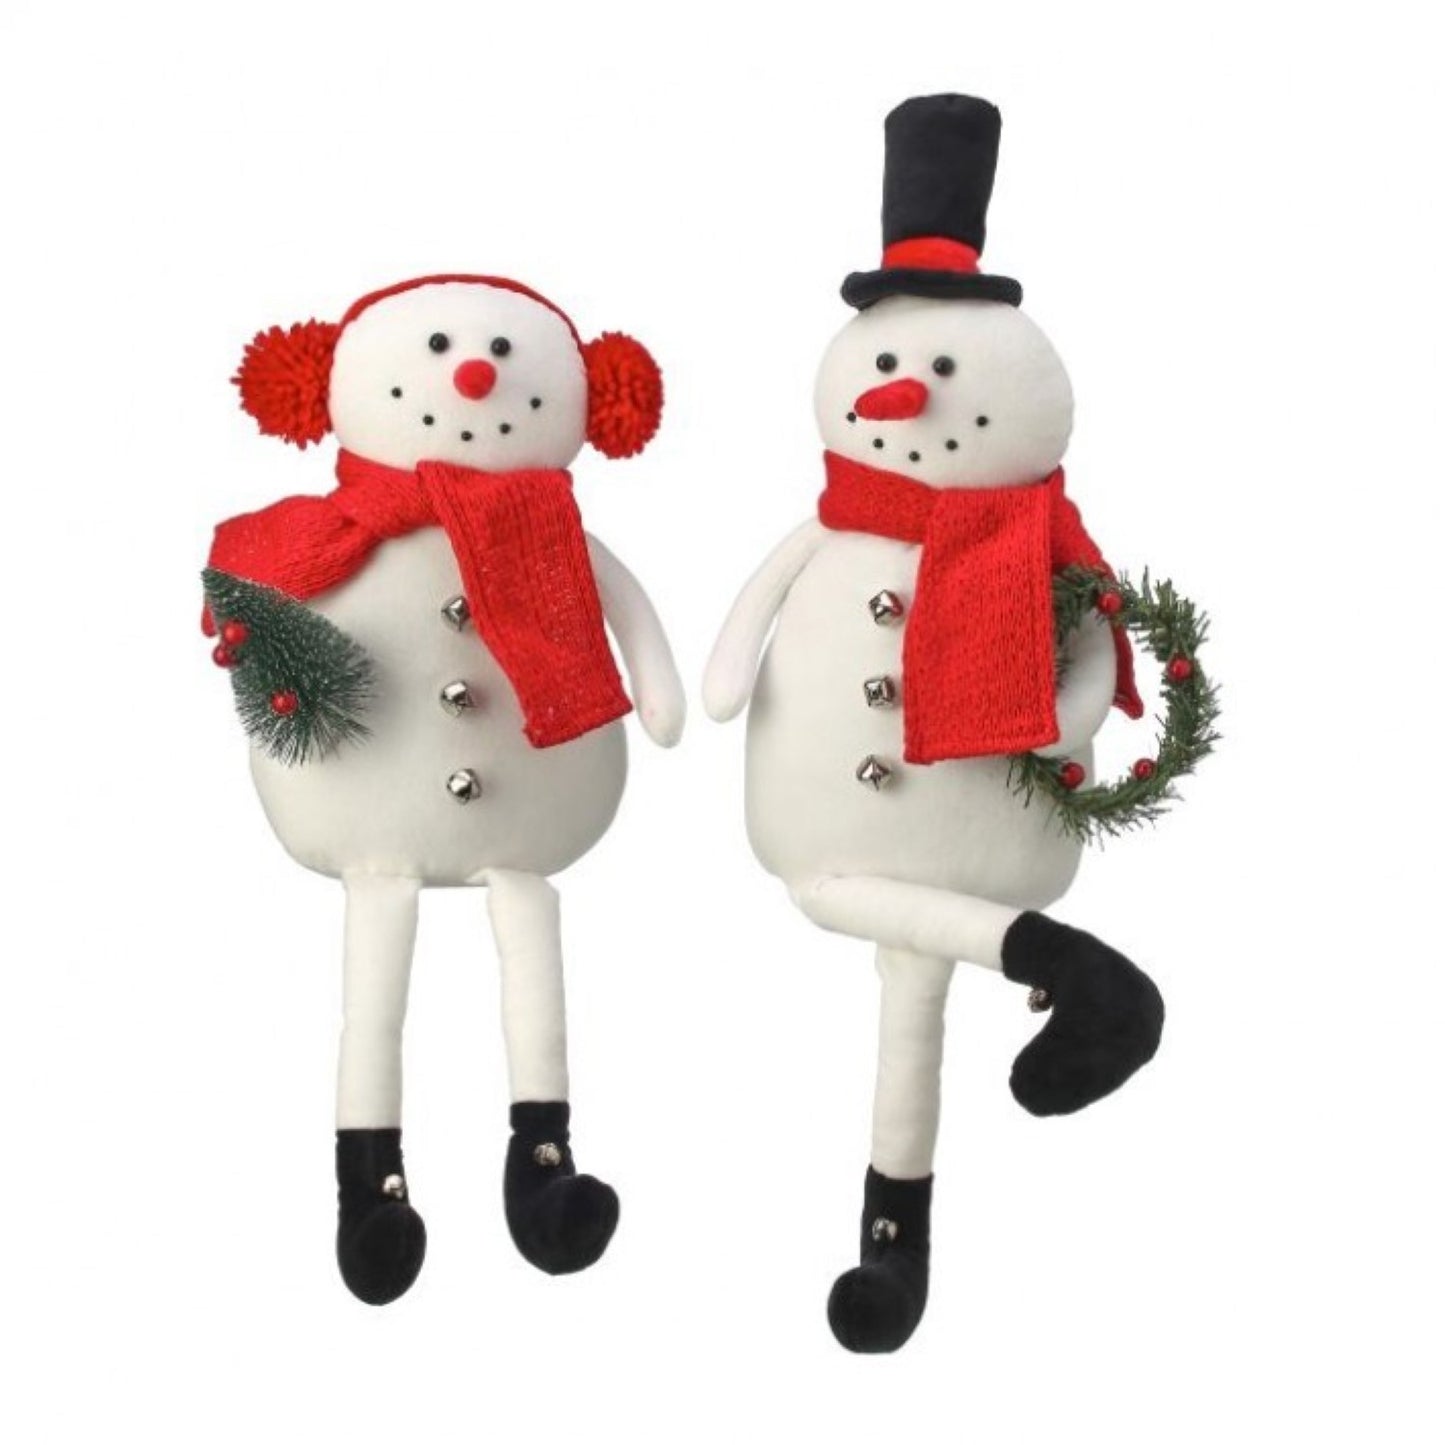 Regency 18-21"Fabric Sitting Snowman with Hat/Muffs Set of 2, Assortment